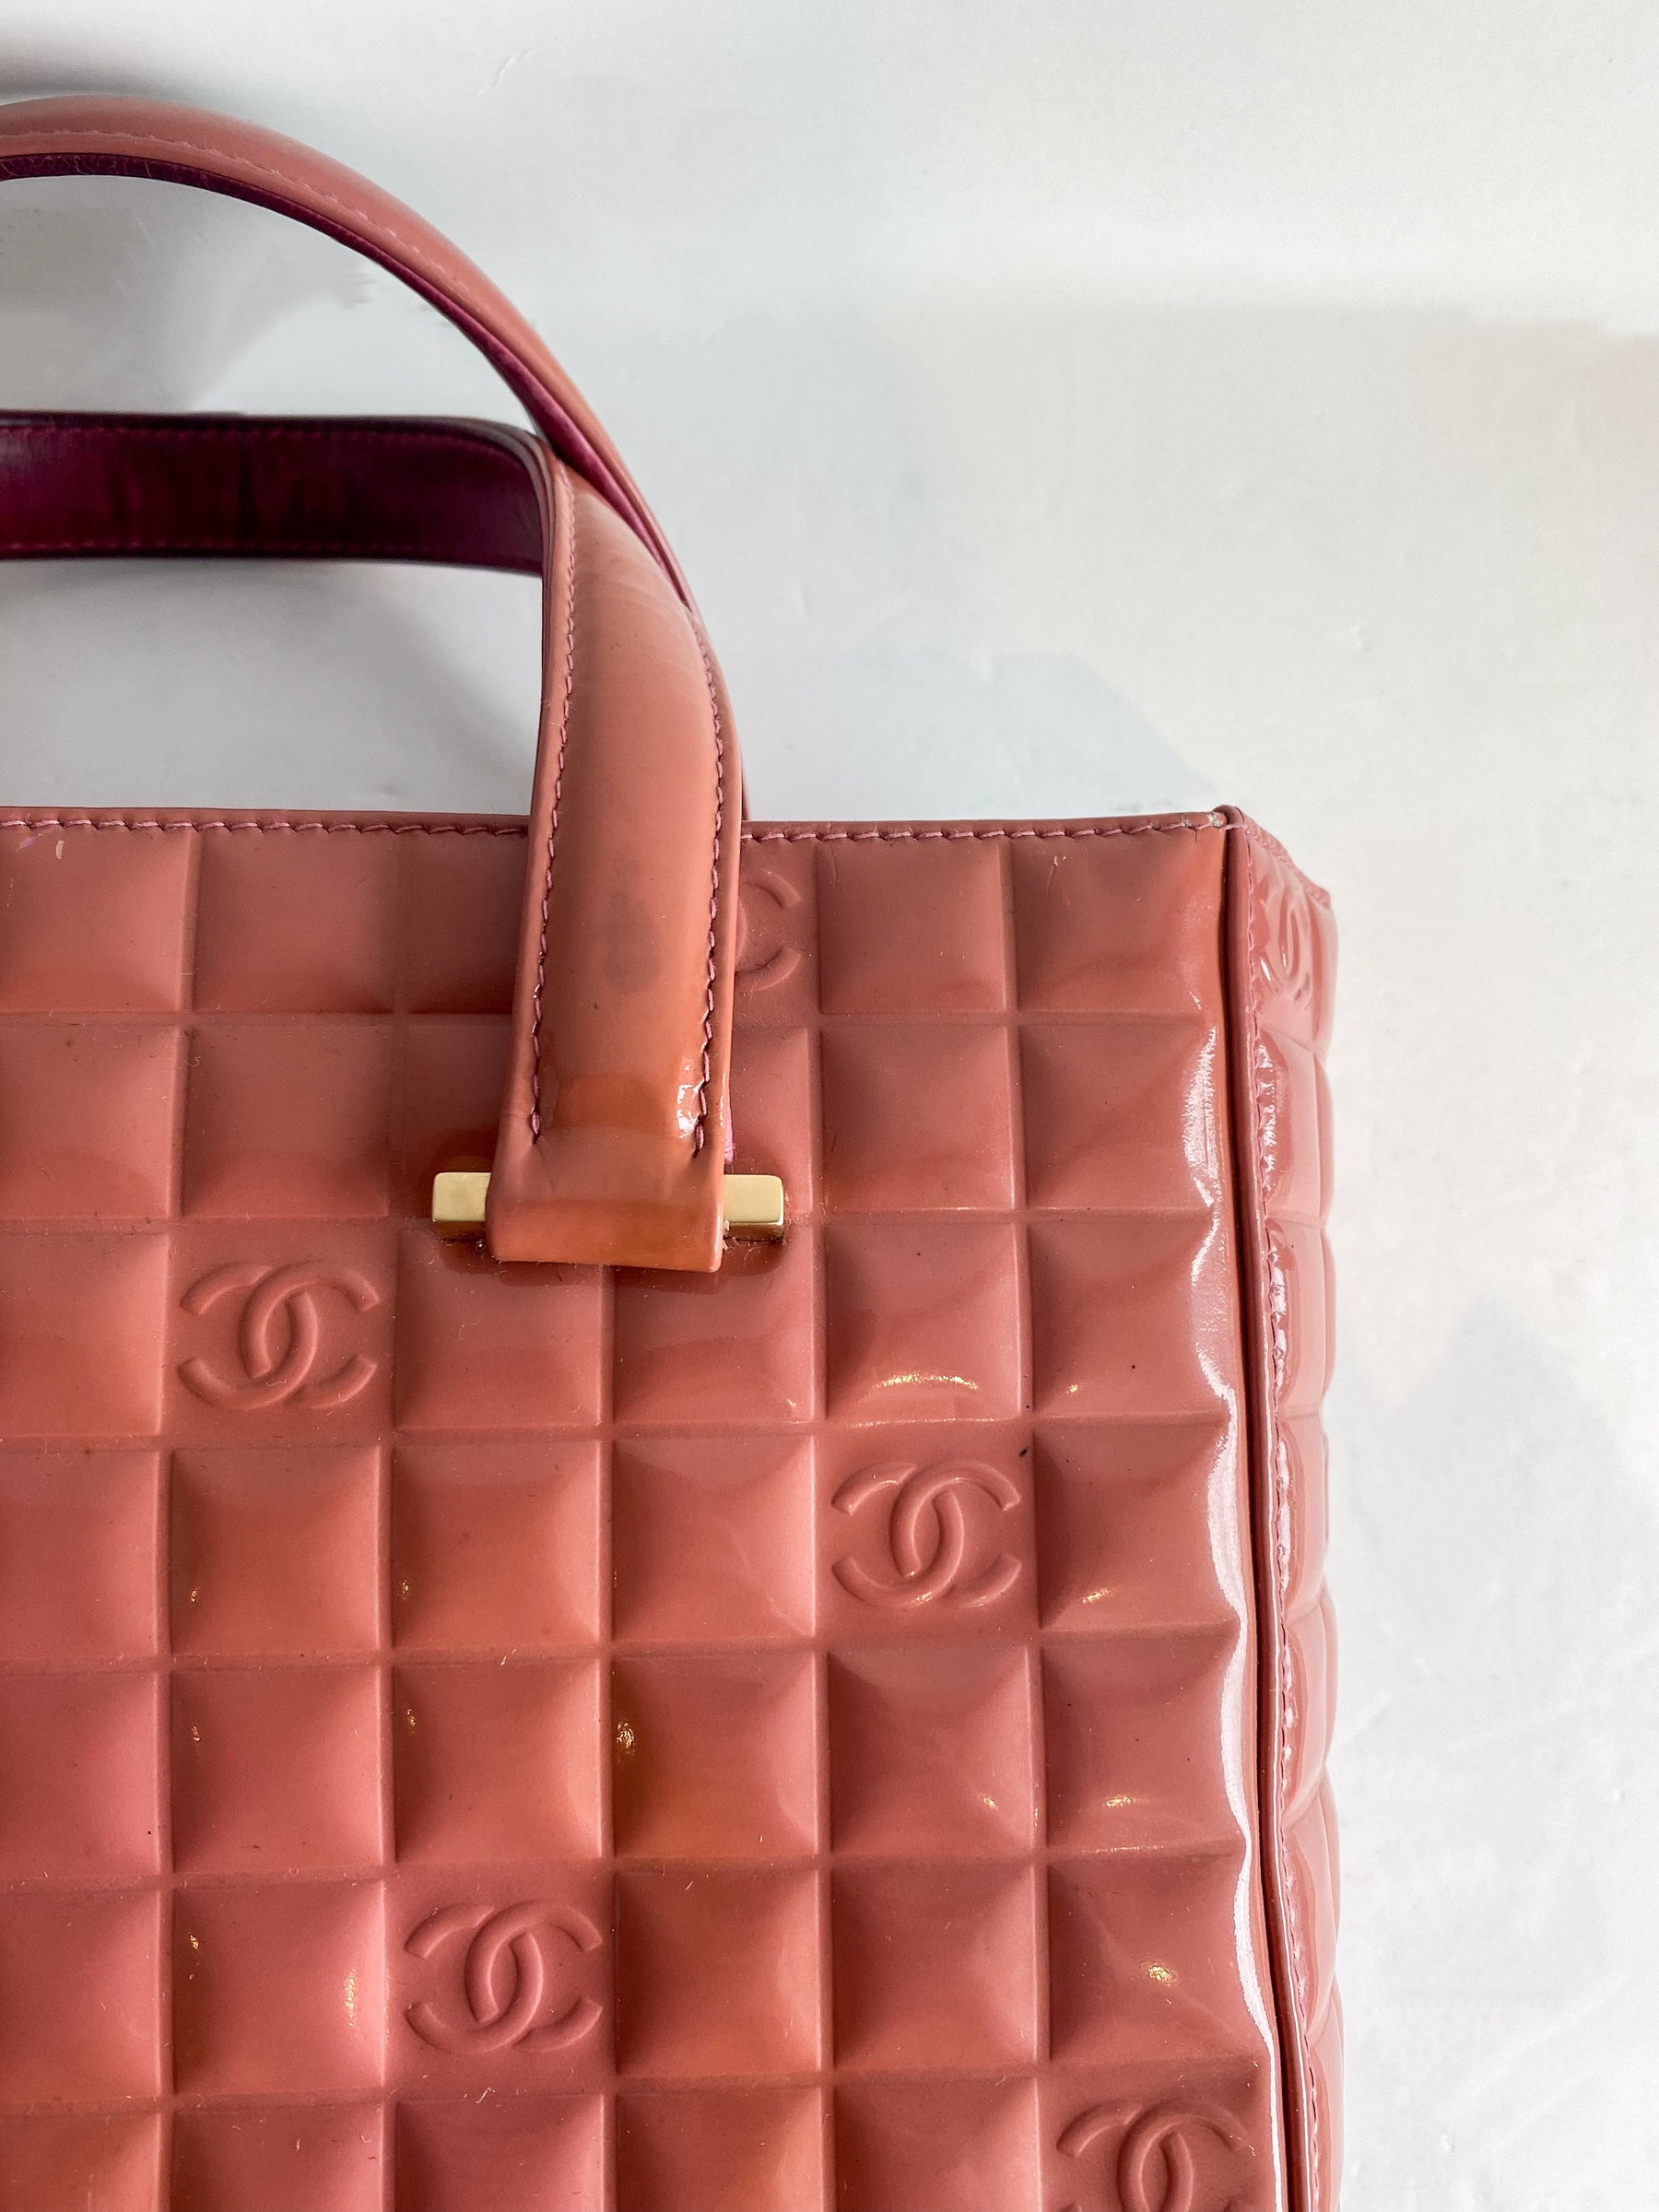 Chanel Chocolate Bar Tote Bag Pink